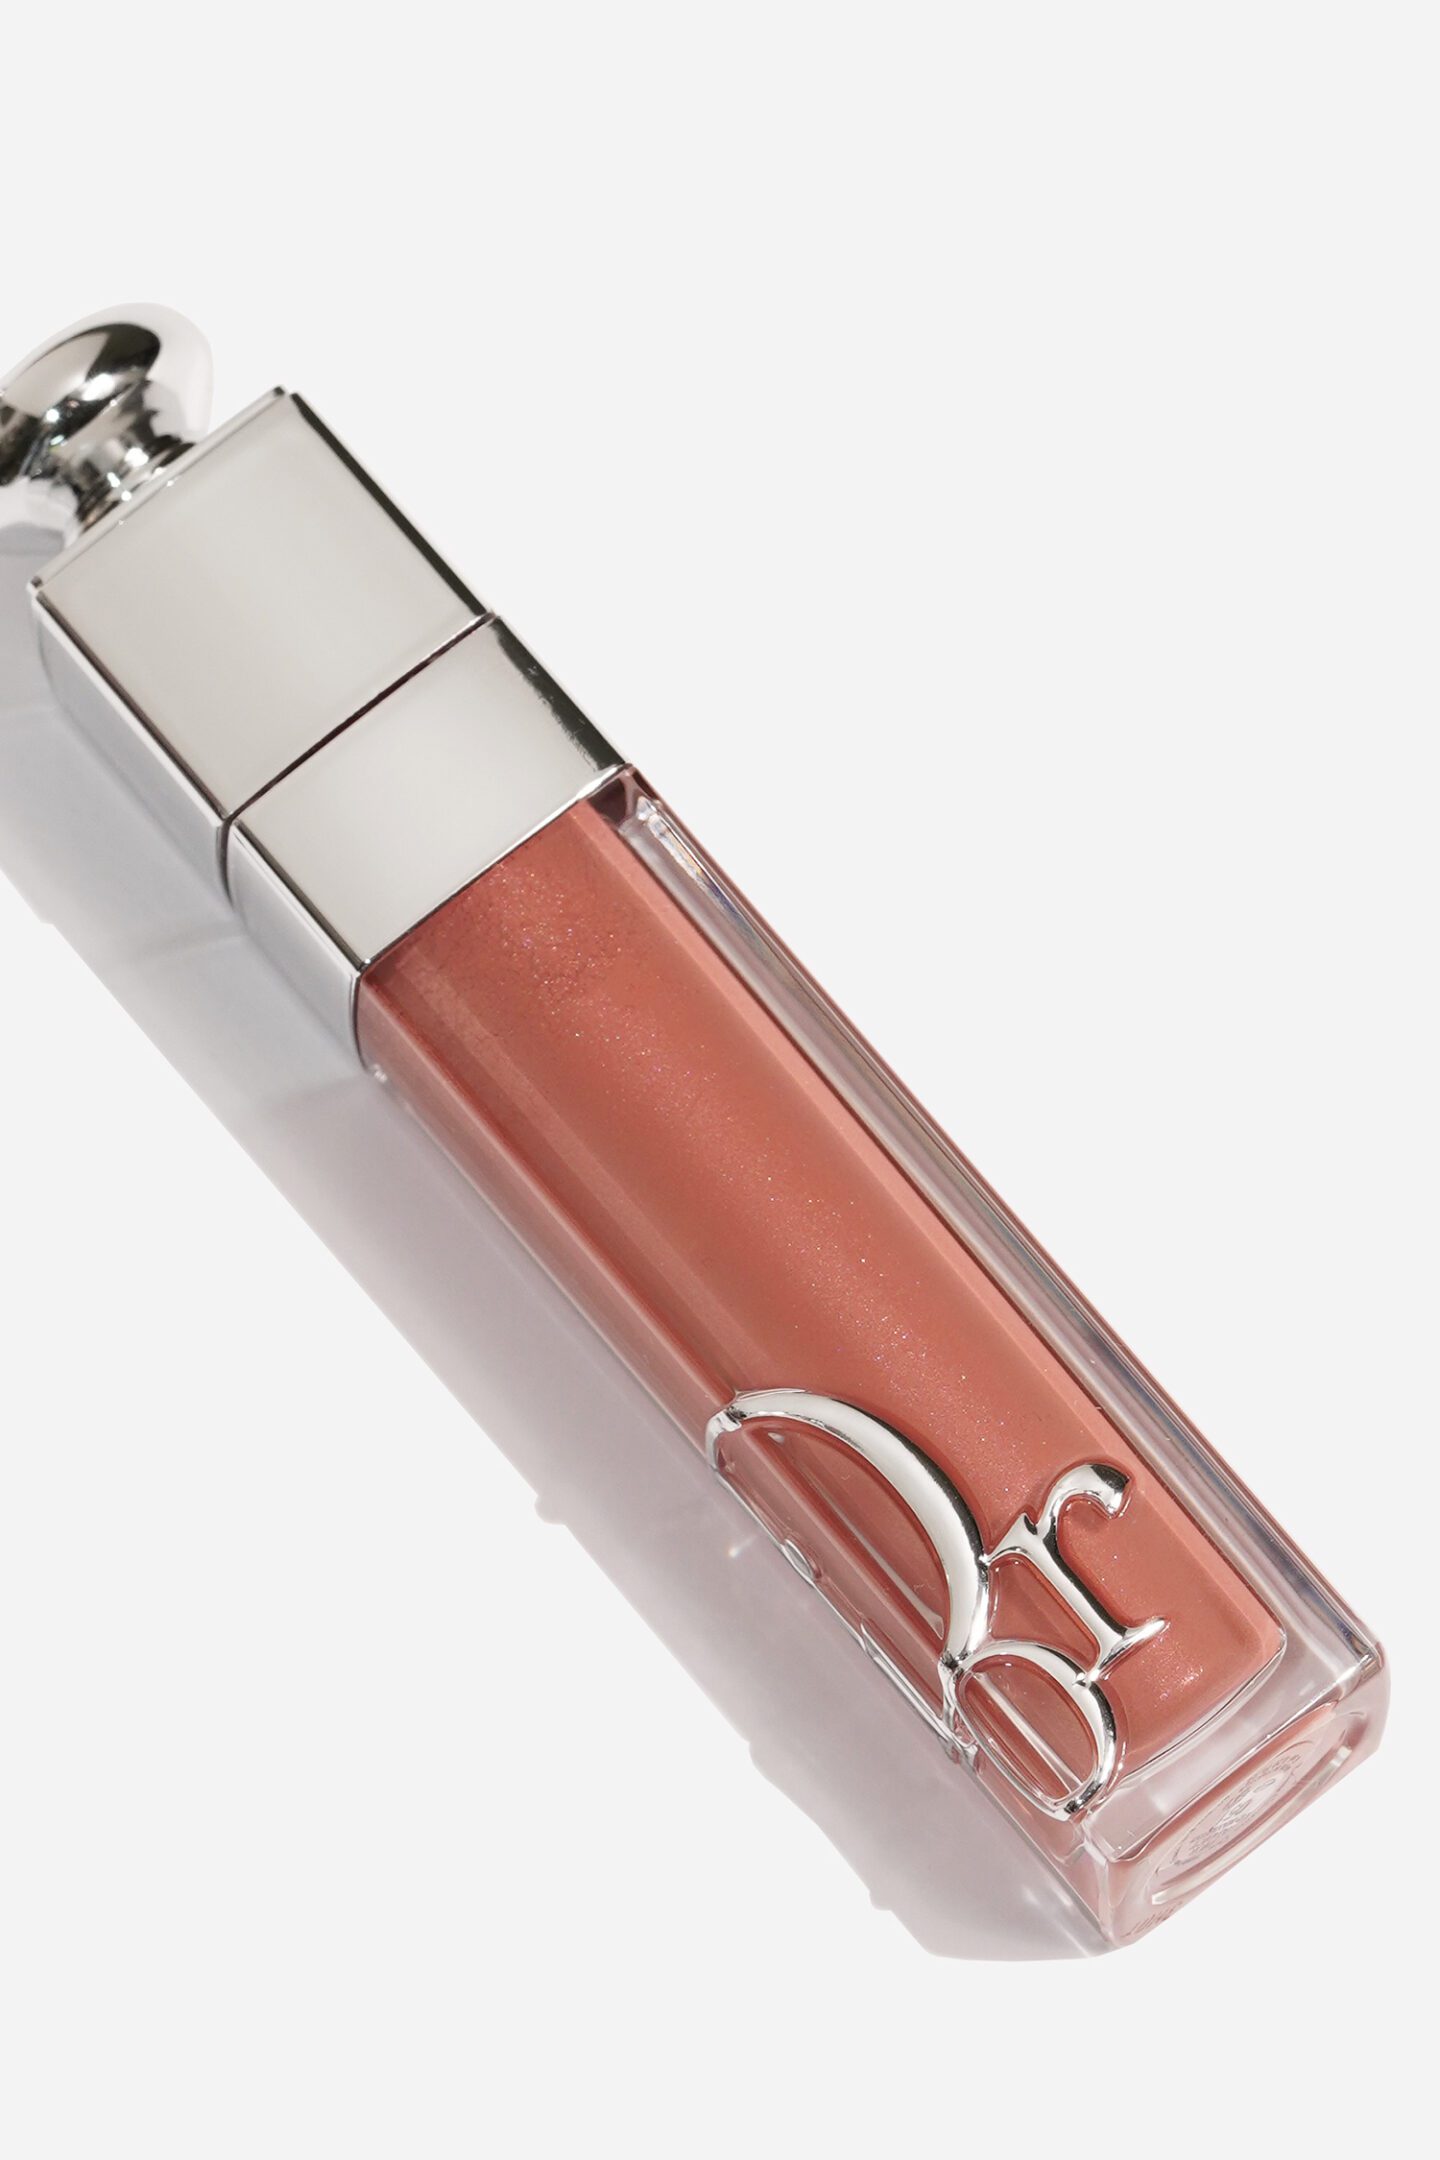 Dior Addict Lip Maximizer Nude Bloom